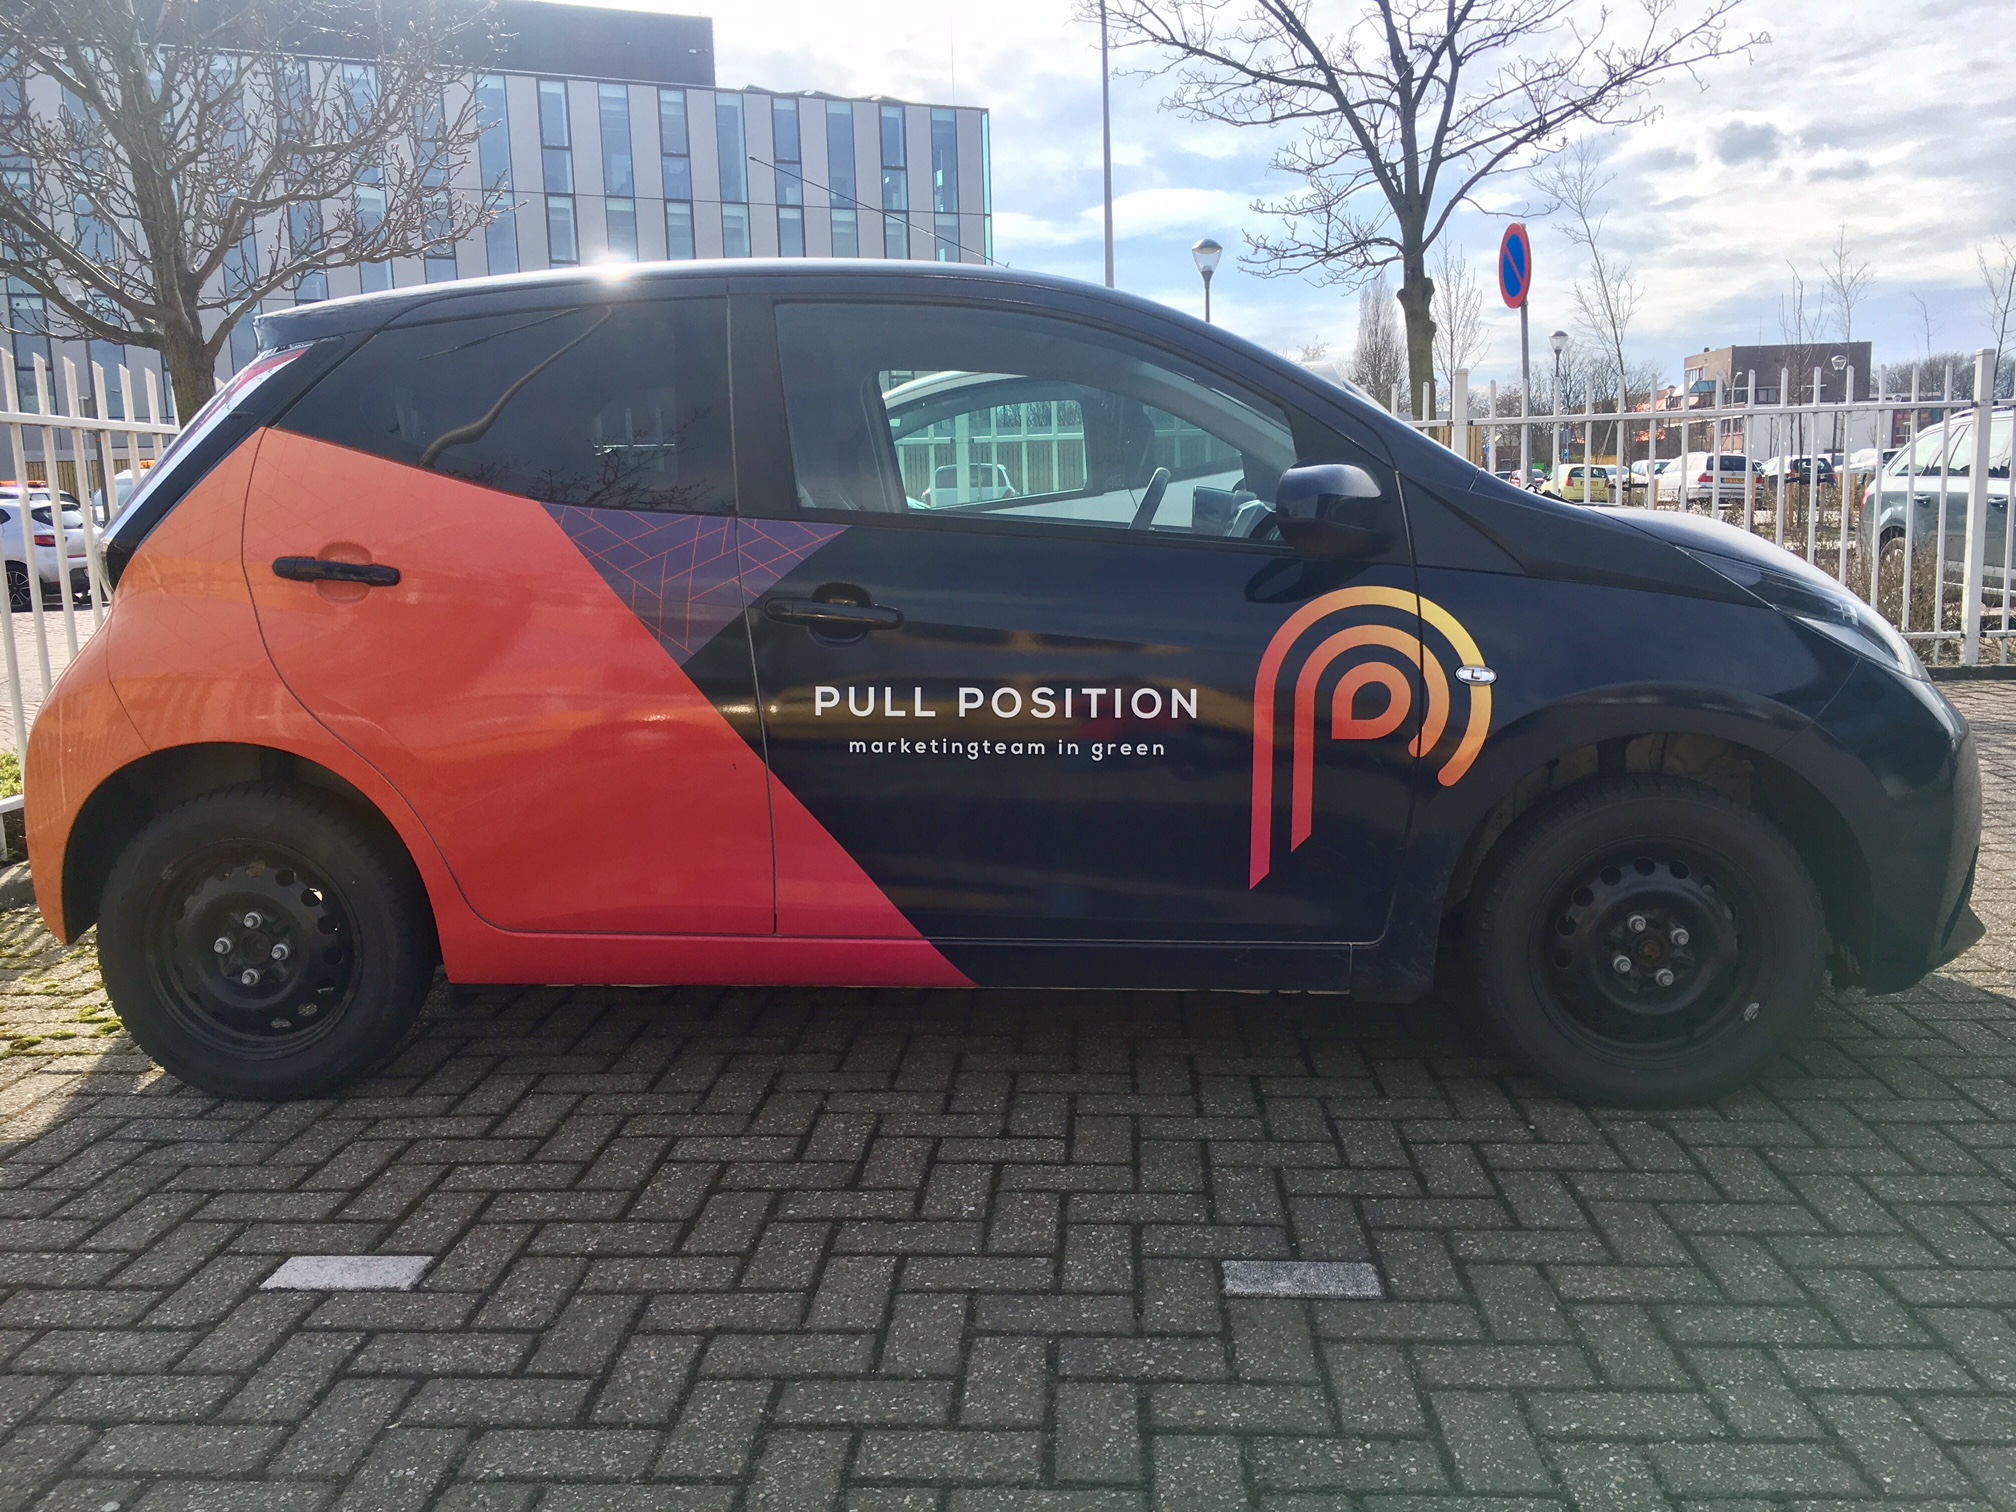 Auto van marketingbureau Pull position